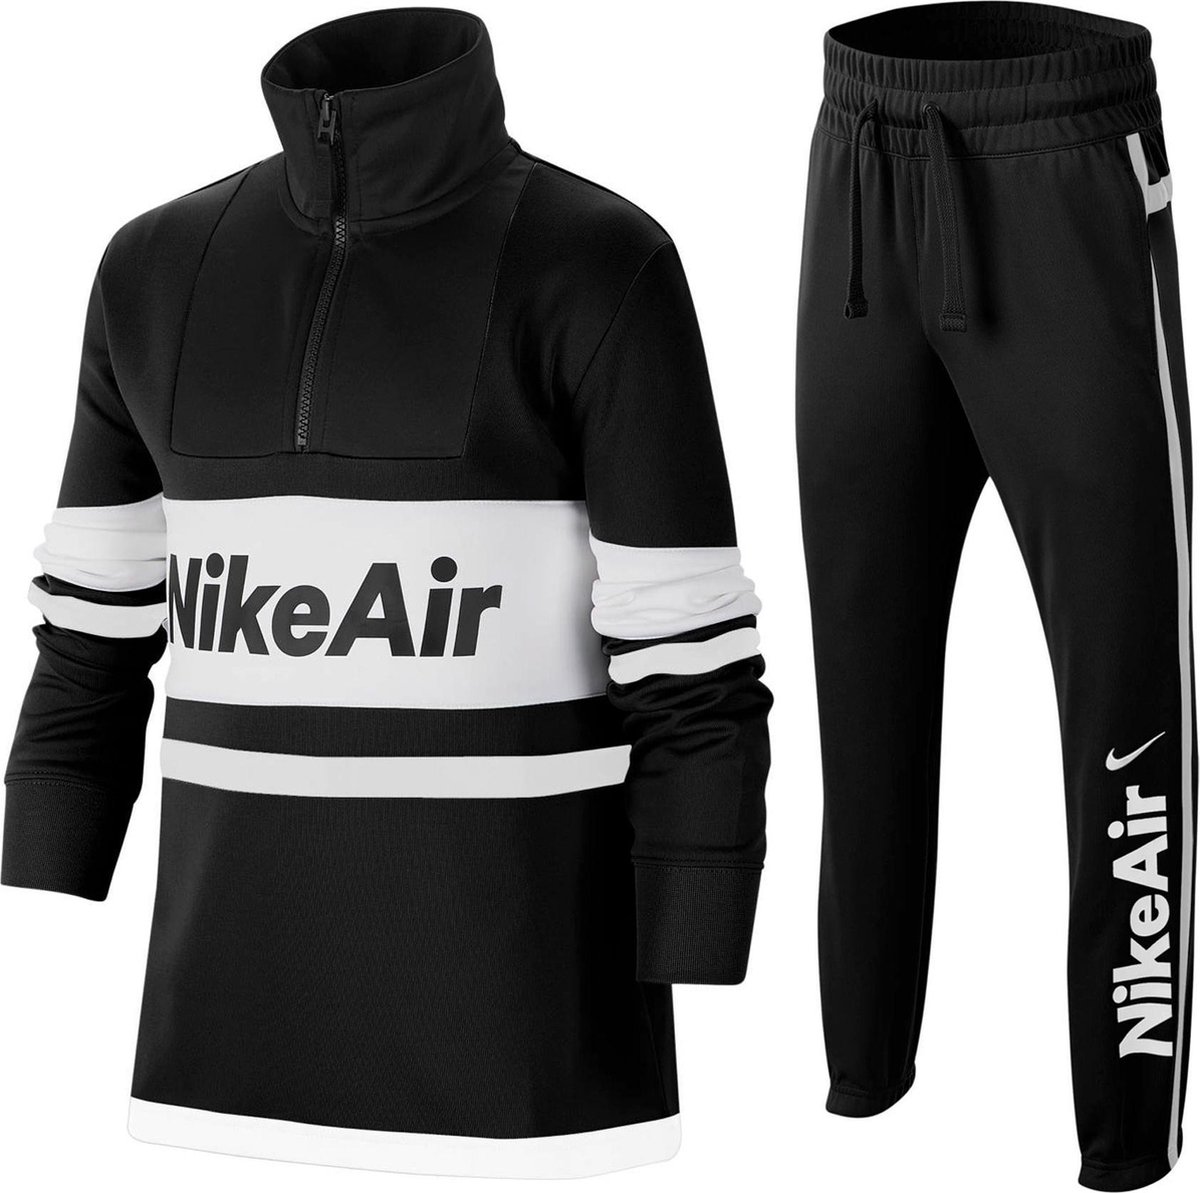 rijm Zogenaamd tweeling Nike Sportswear Air Trainingspak Kinderen - Zwart/Wit - Maat 128 | bol.com